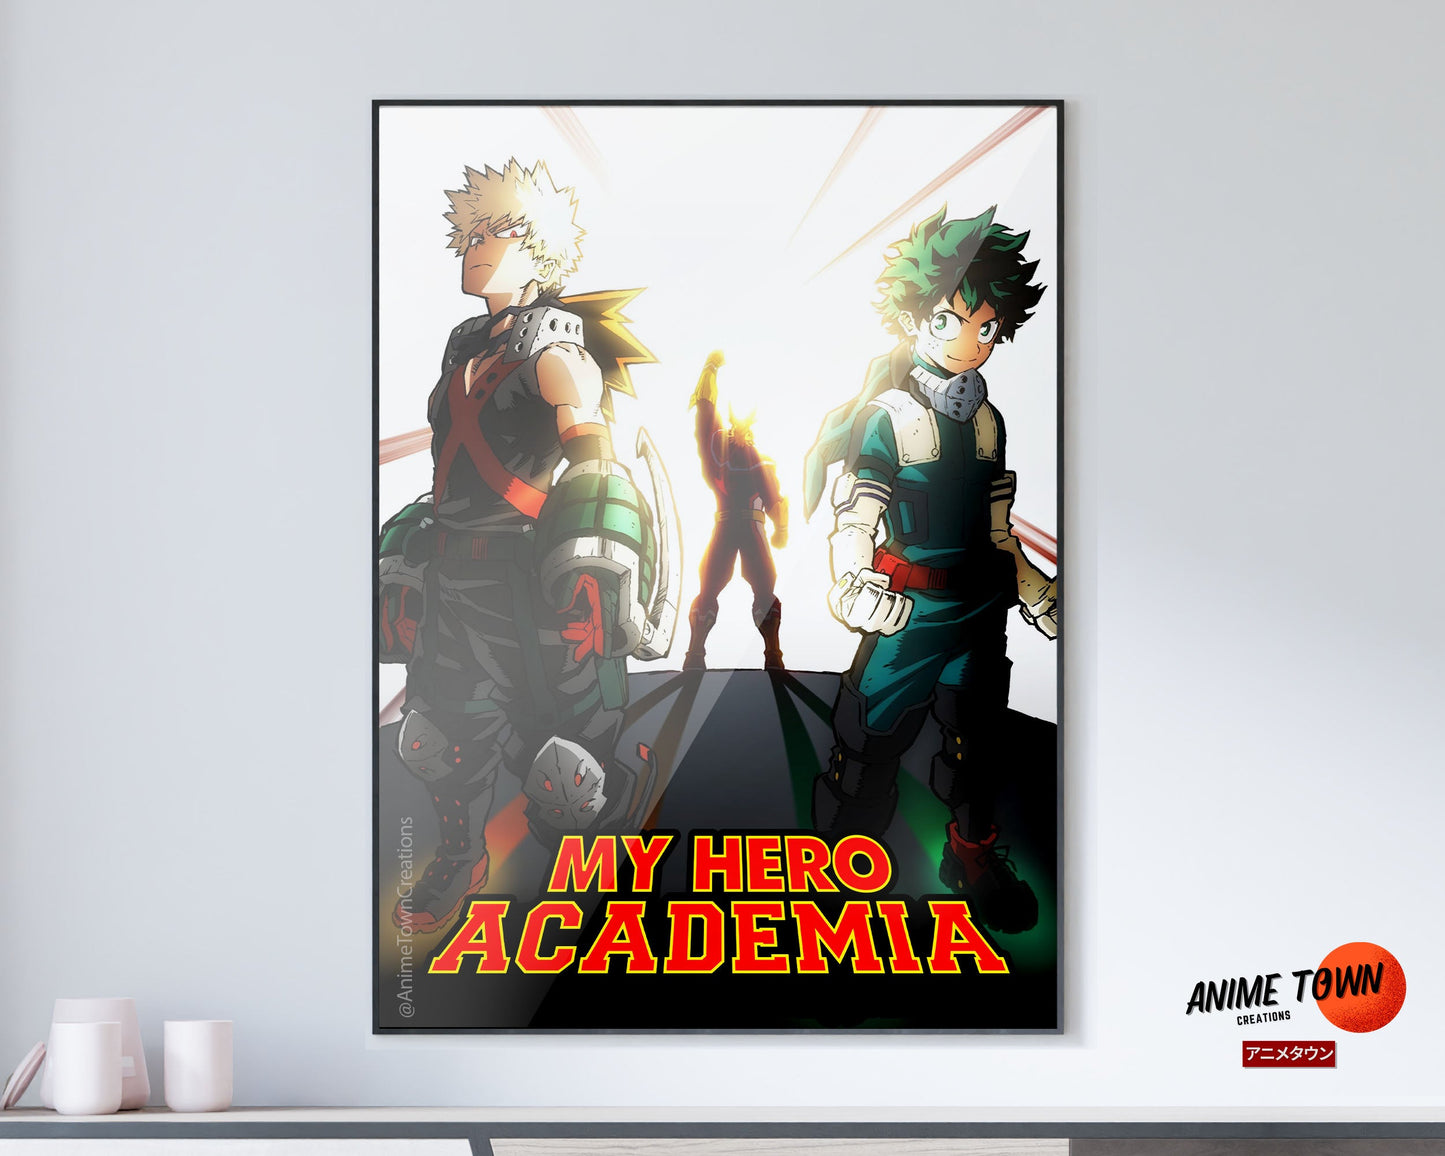 Anime Town Creations Poster My Hero Academia Bakugo, Deku vs All Might 5" x 7" Home Goods - Anime My Hero Academia Poster